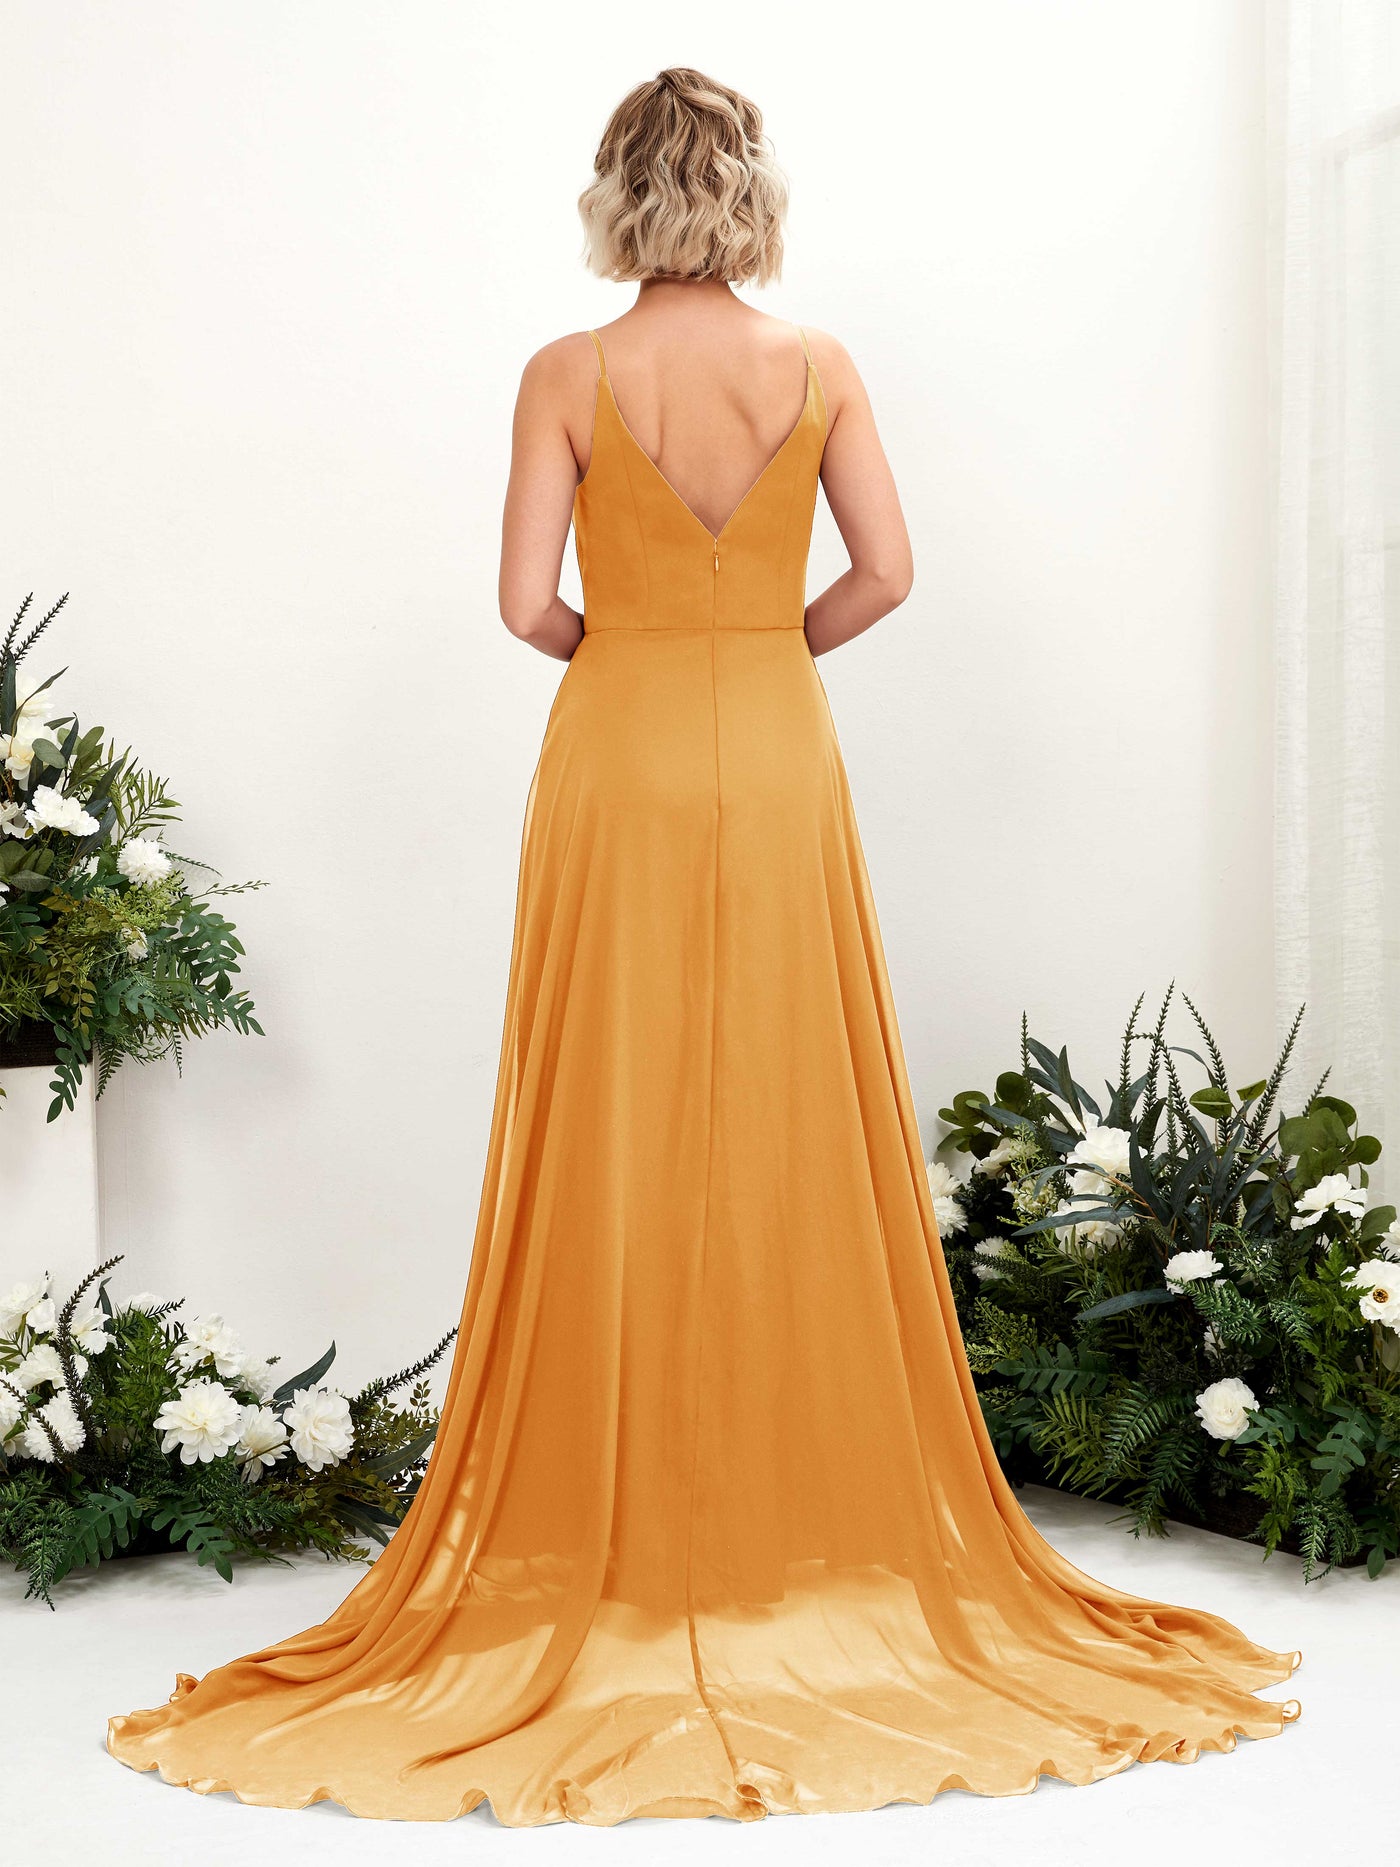 Mango Bridesmaid Dresses Bridesmaid Dress A-line Chiffon V-neck Full Length Sleeveless Wedding Party Dress (81224102)#color_mango